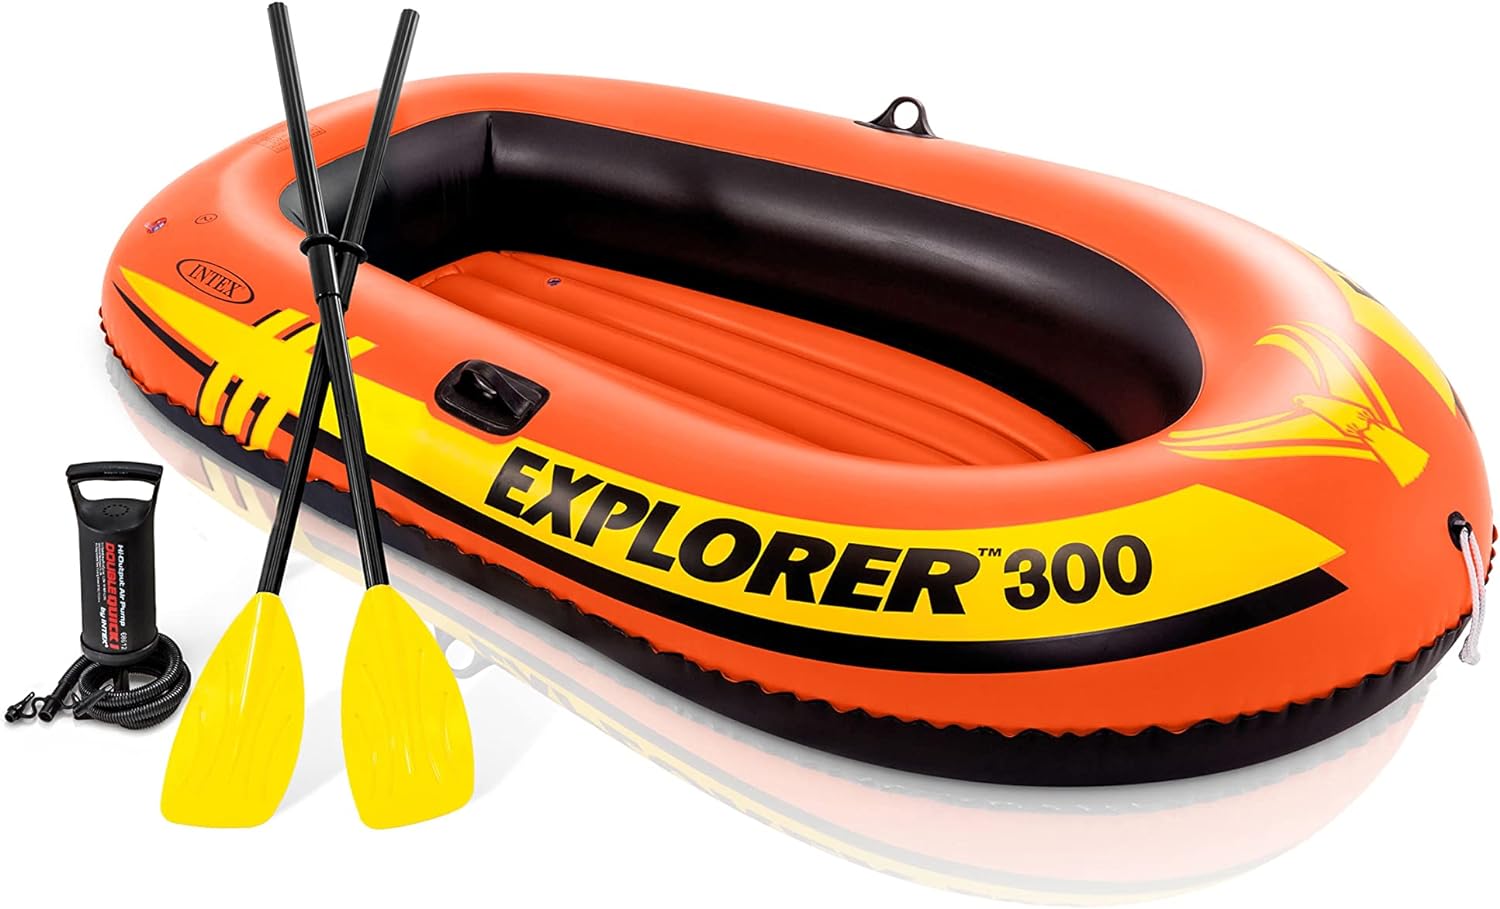 INTEX Explorer Inflatable Boat Series Review